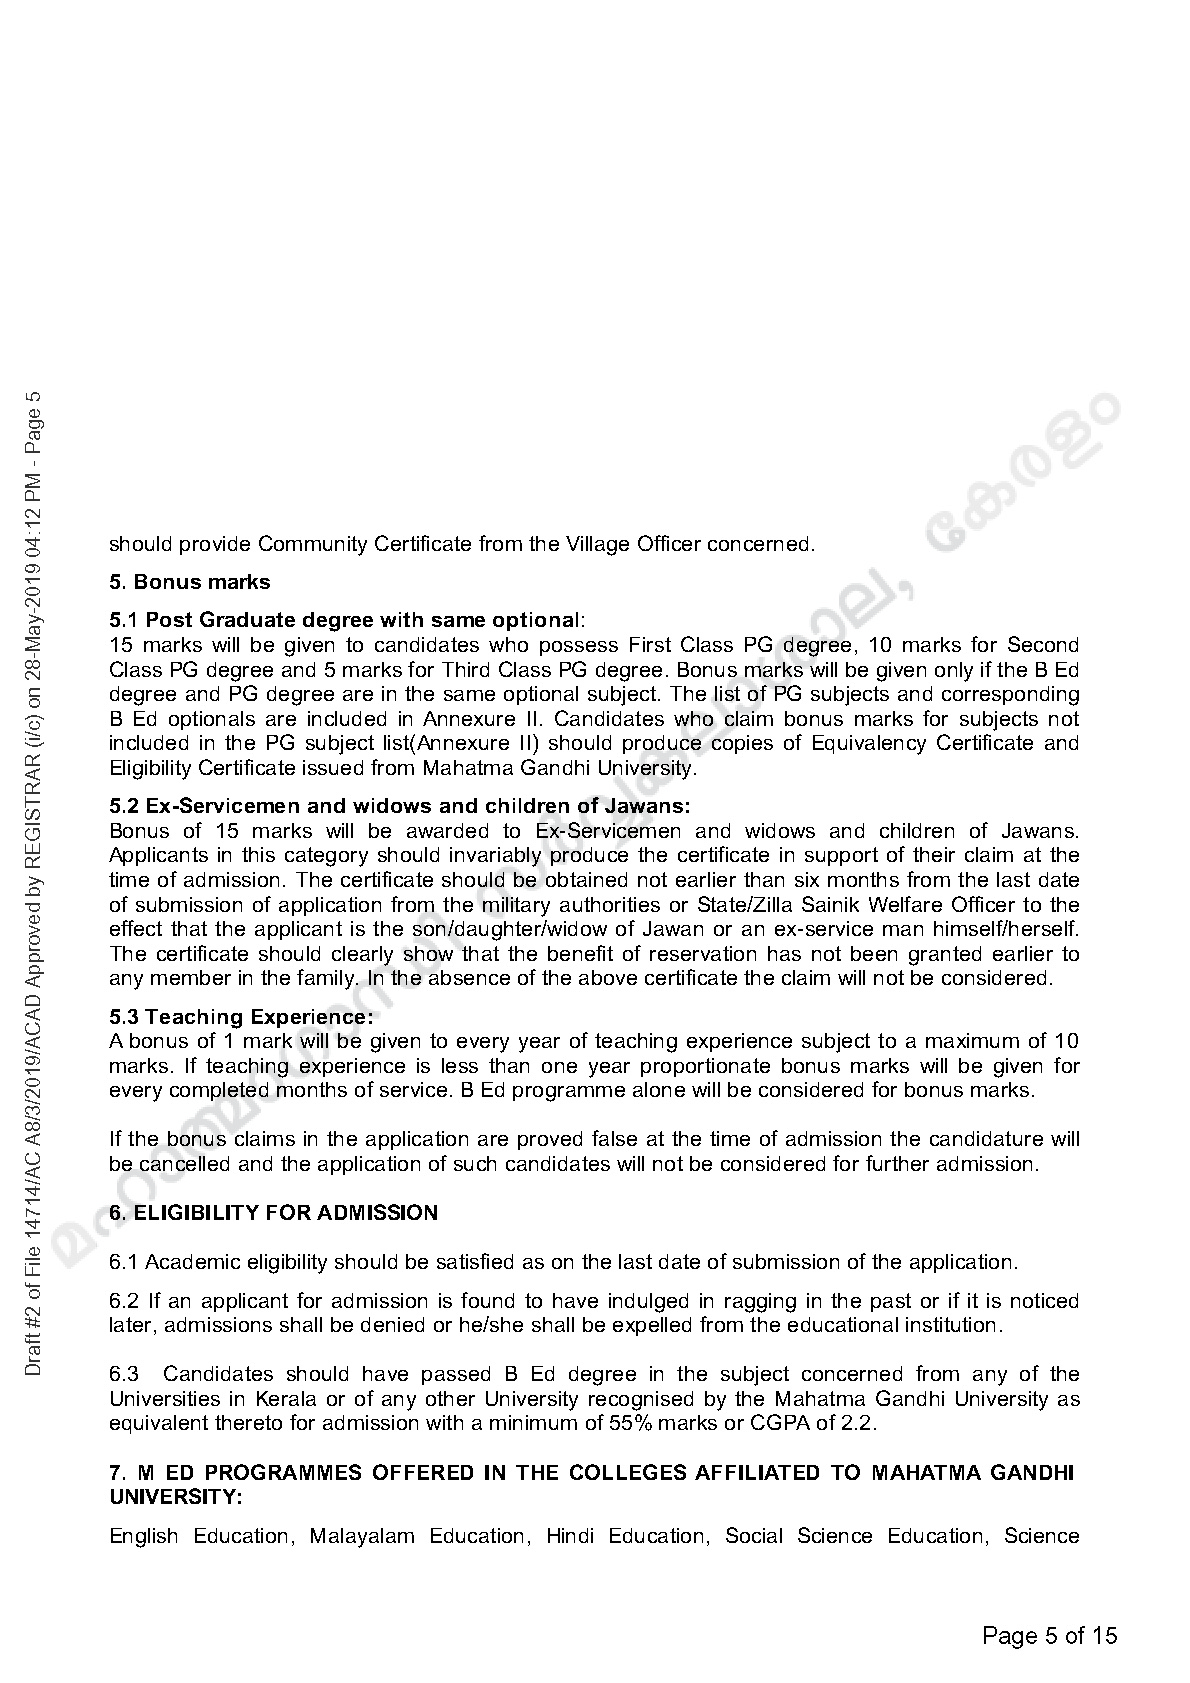 MG University M Ed Prospectus and Application form 2019 2020 - Notification Image 5